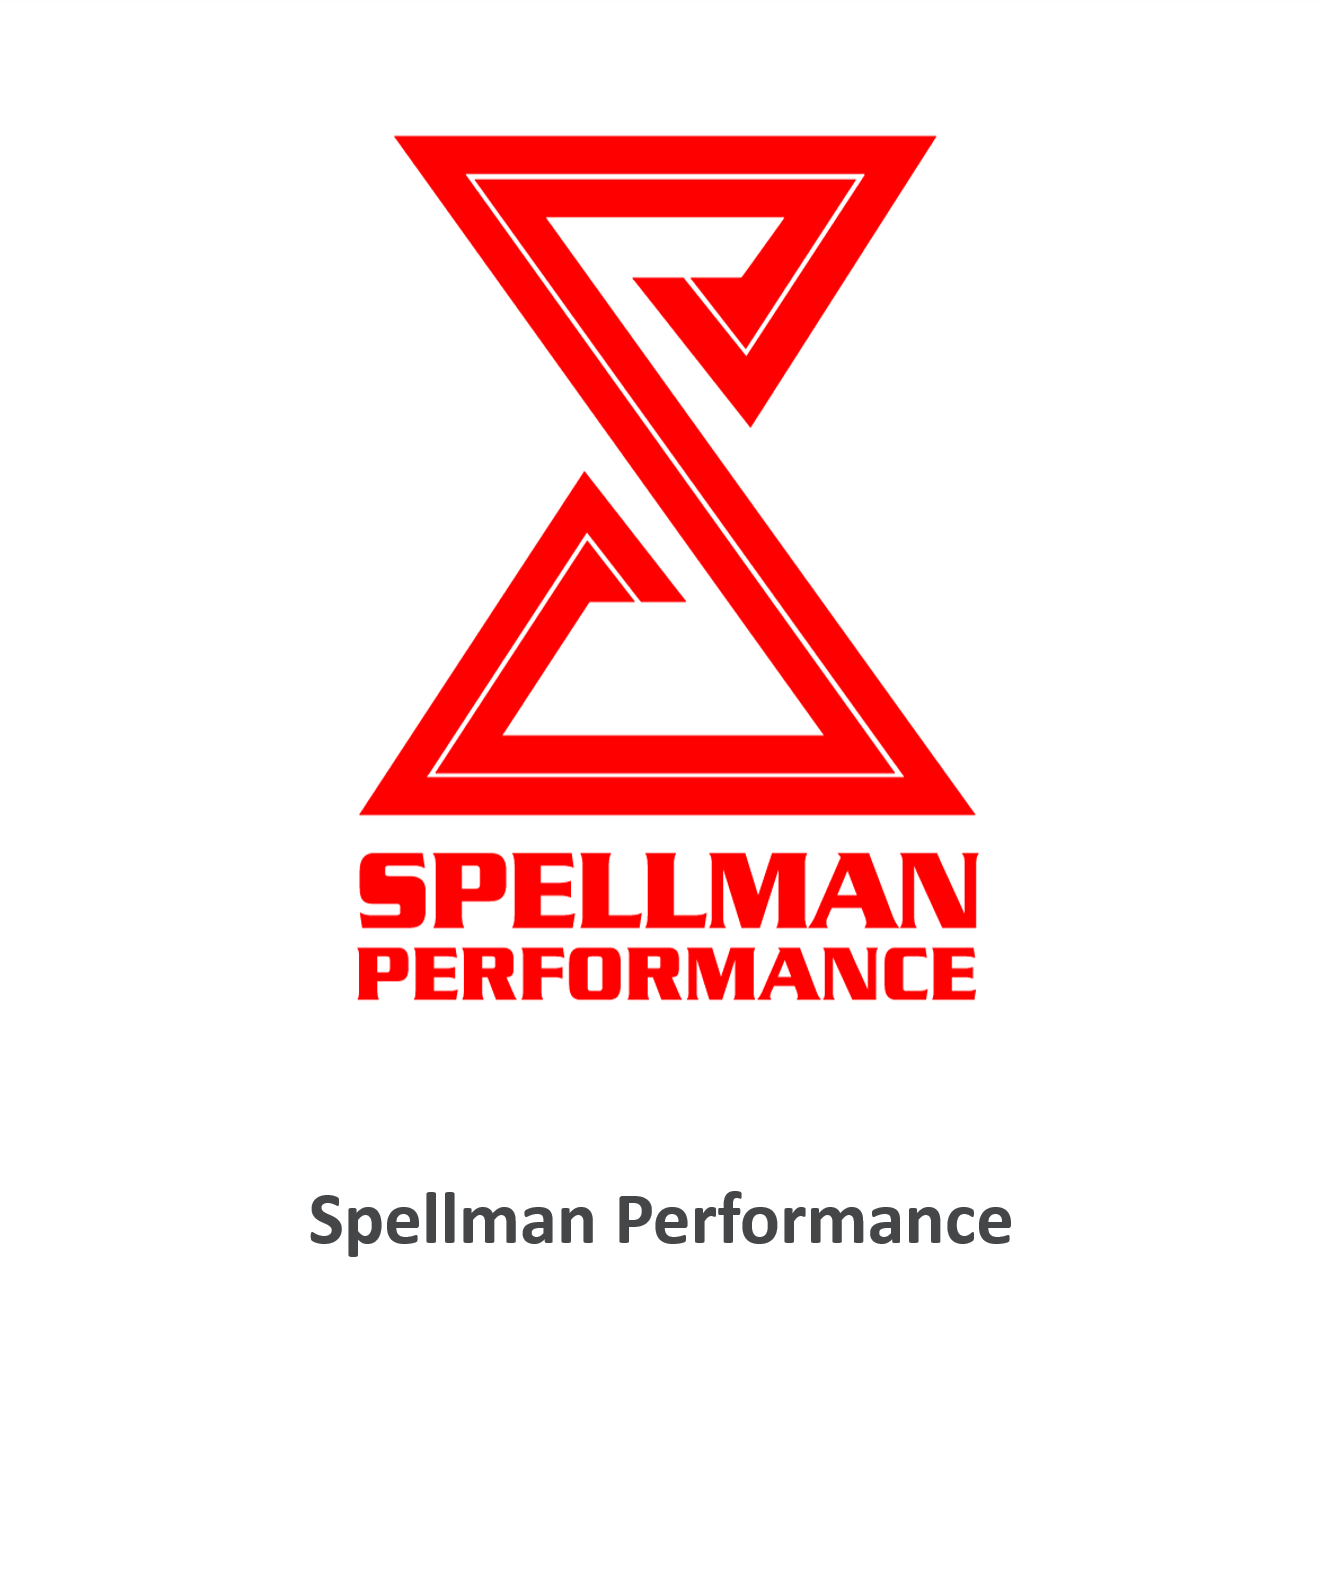 https://mclloyd.com/wp-content/uploads/2021/05/Spellman-Performance-3.png